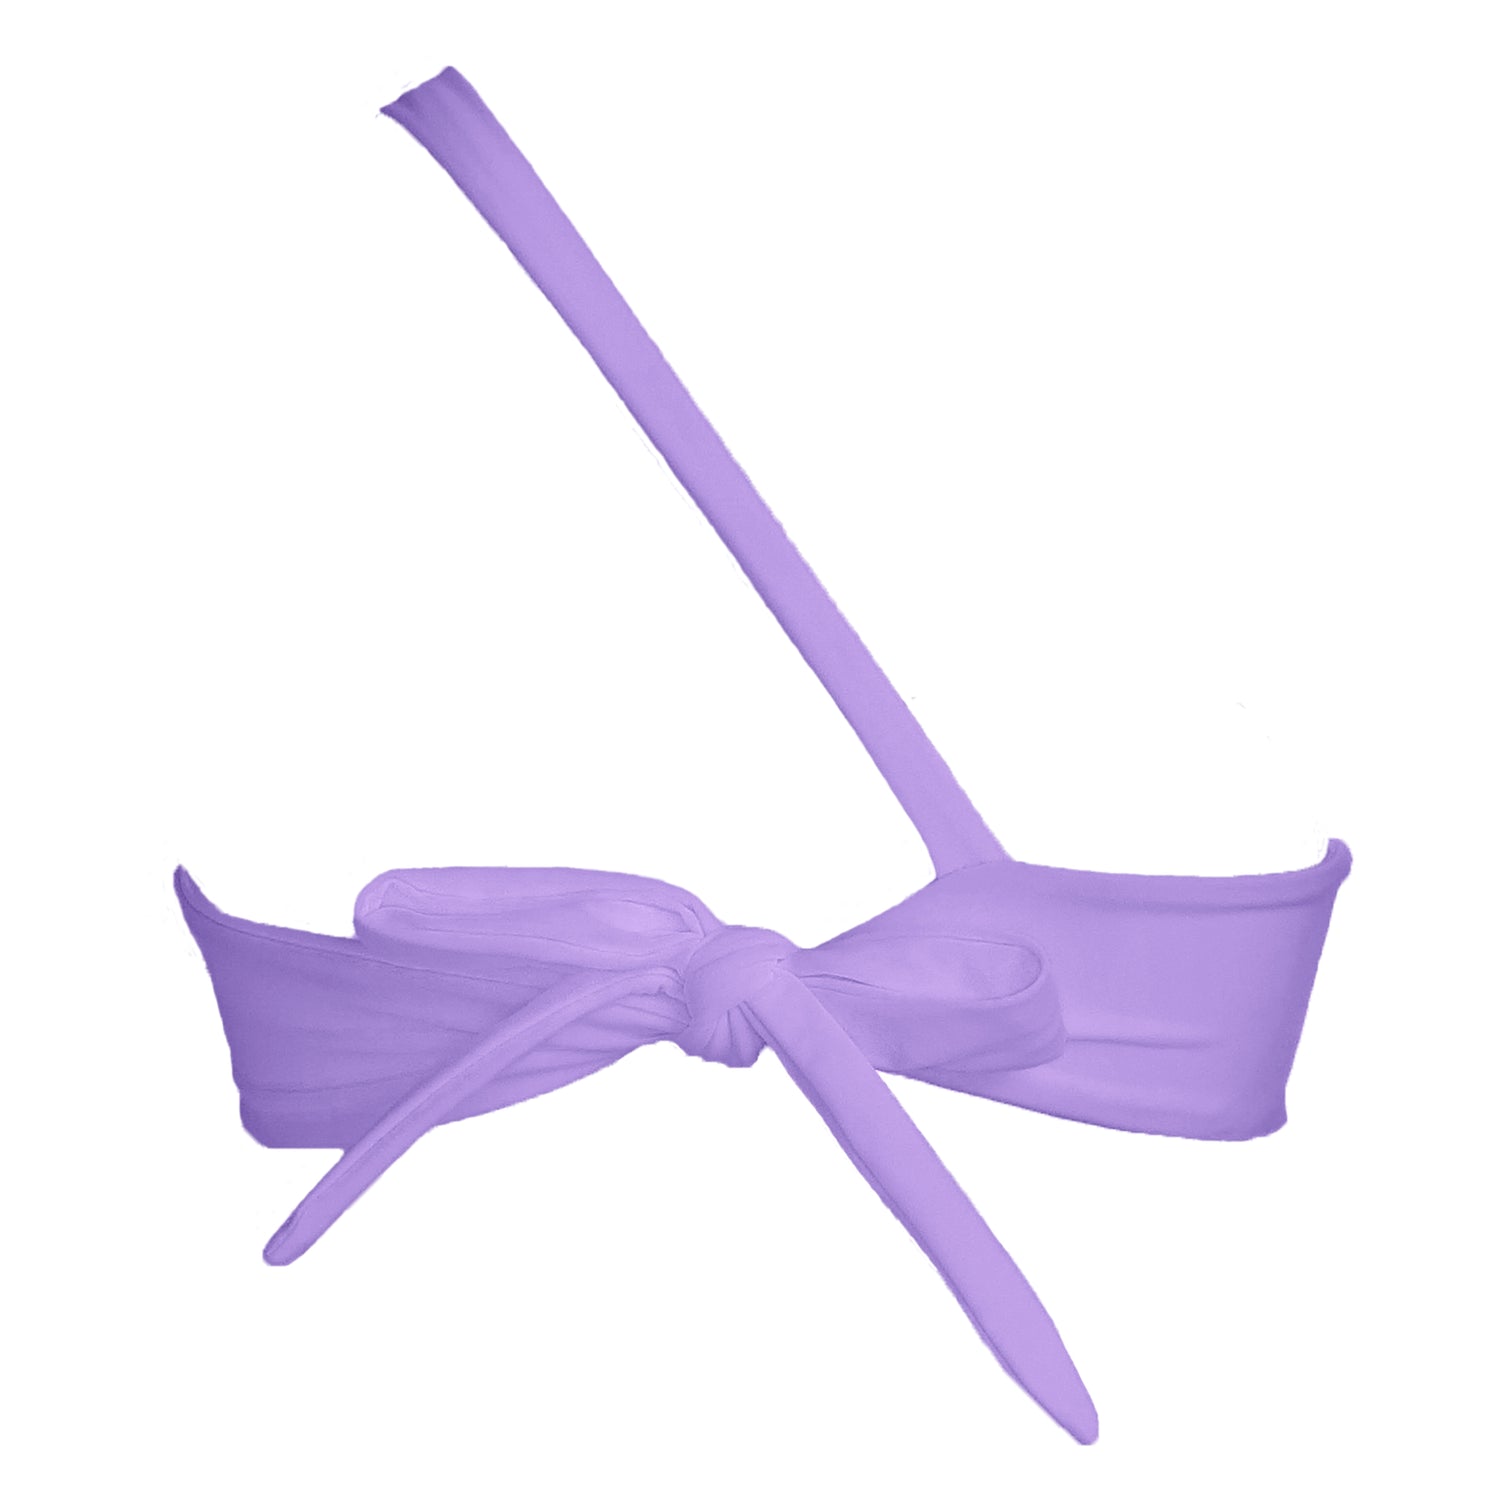 Back view of pastel purple asymmetrical strap bikini top with adjustable tie back strap.